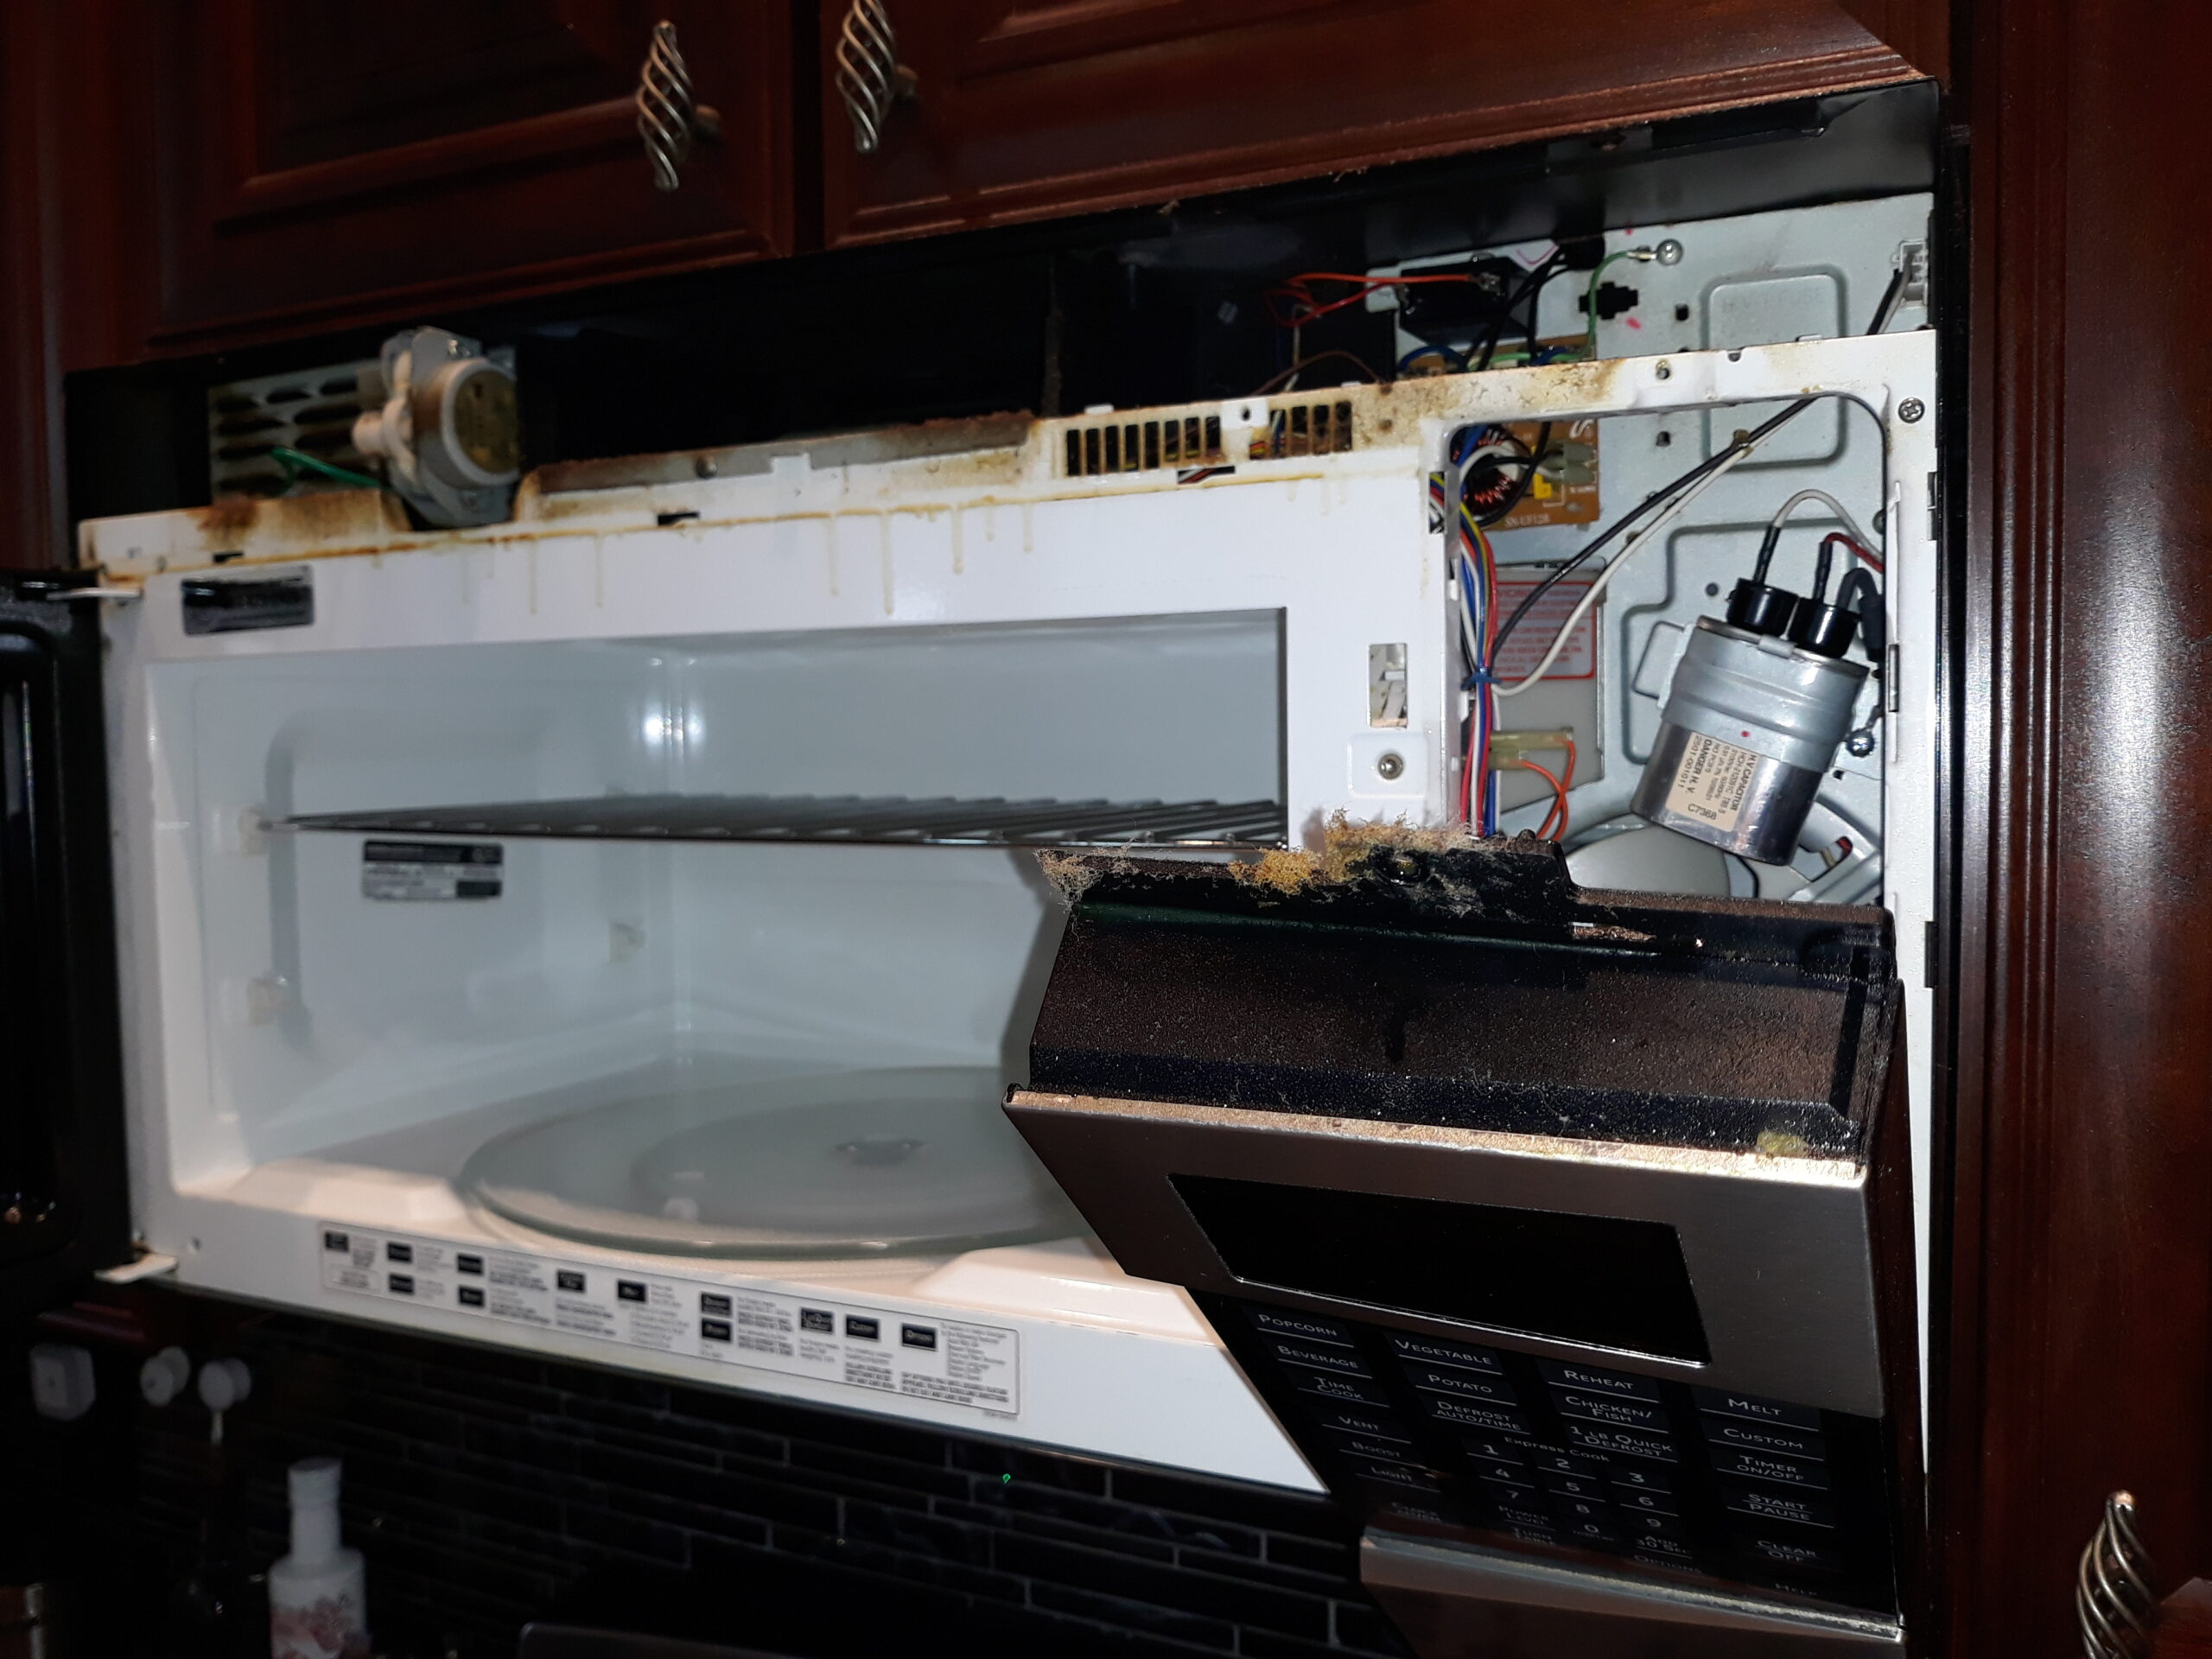 appliance repair microwave repair needs new circuit board typhoon lagoon access rd lake buena vista orlando fl 32821